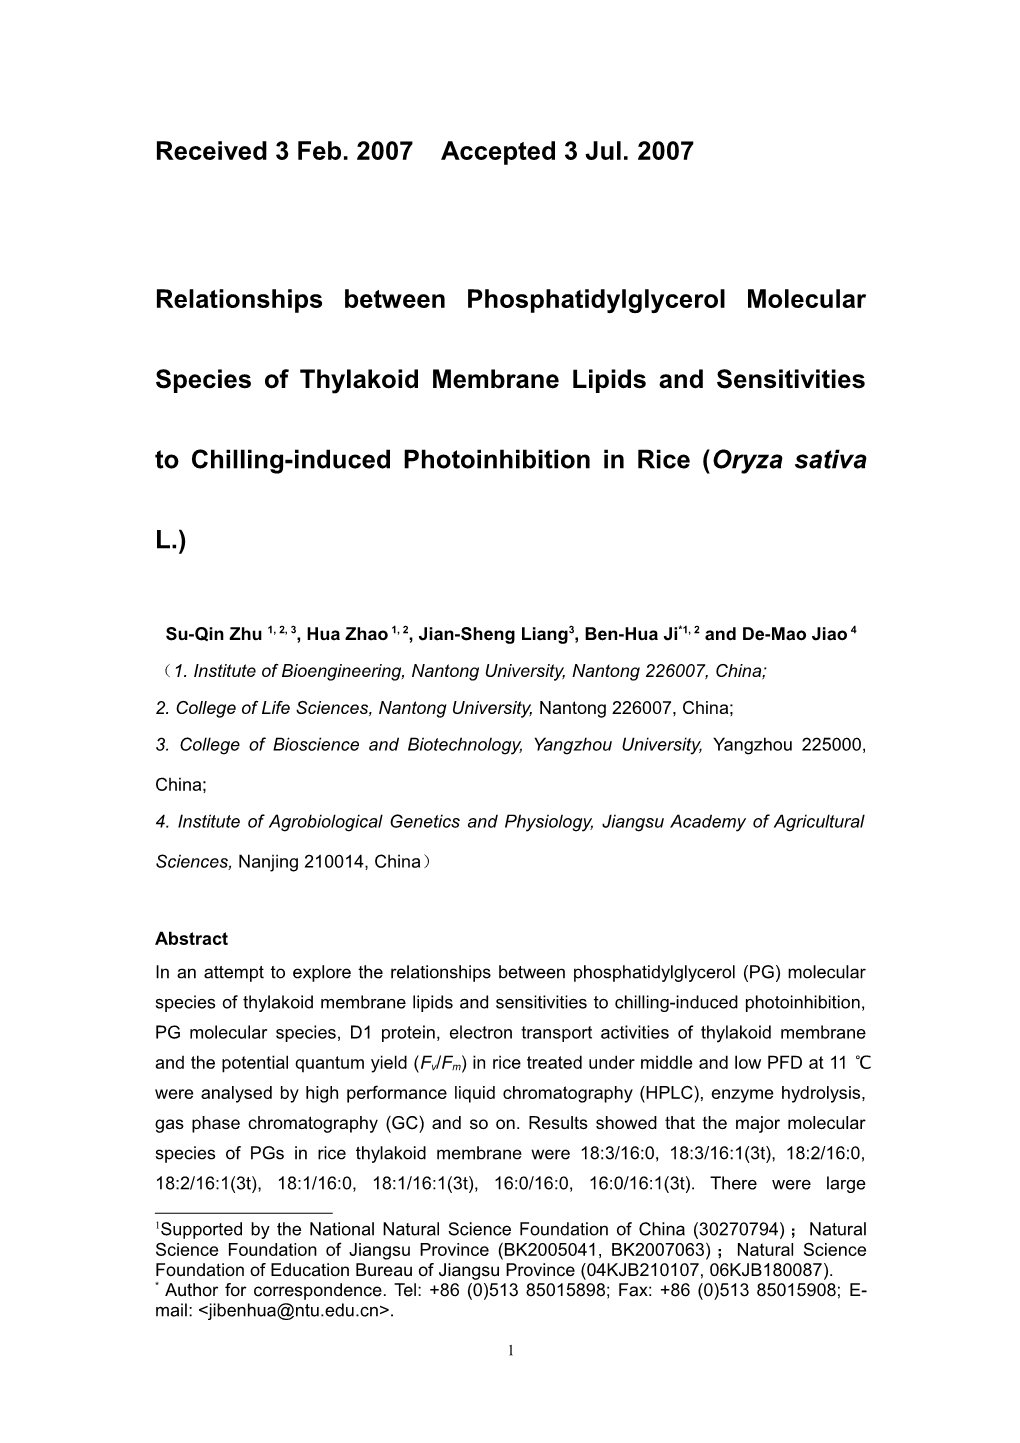 Relationships Between Phosphatidylglycerol Molecular Species of Thylakoid Membrane Lipids